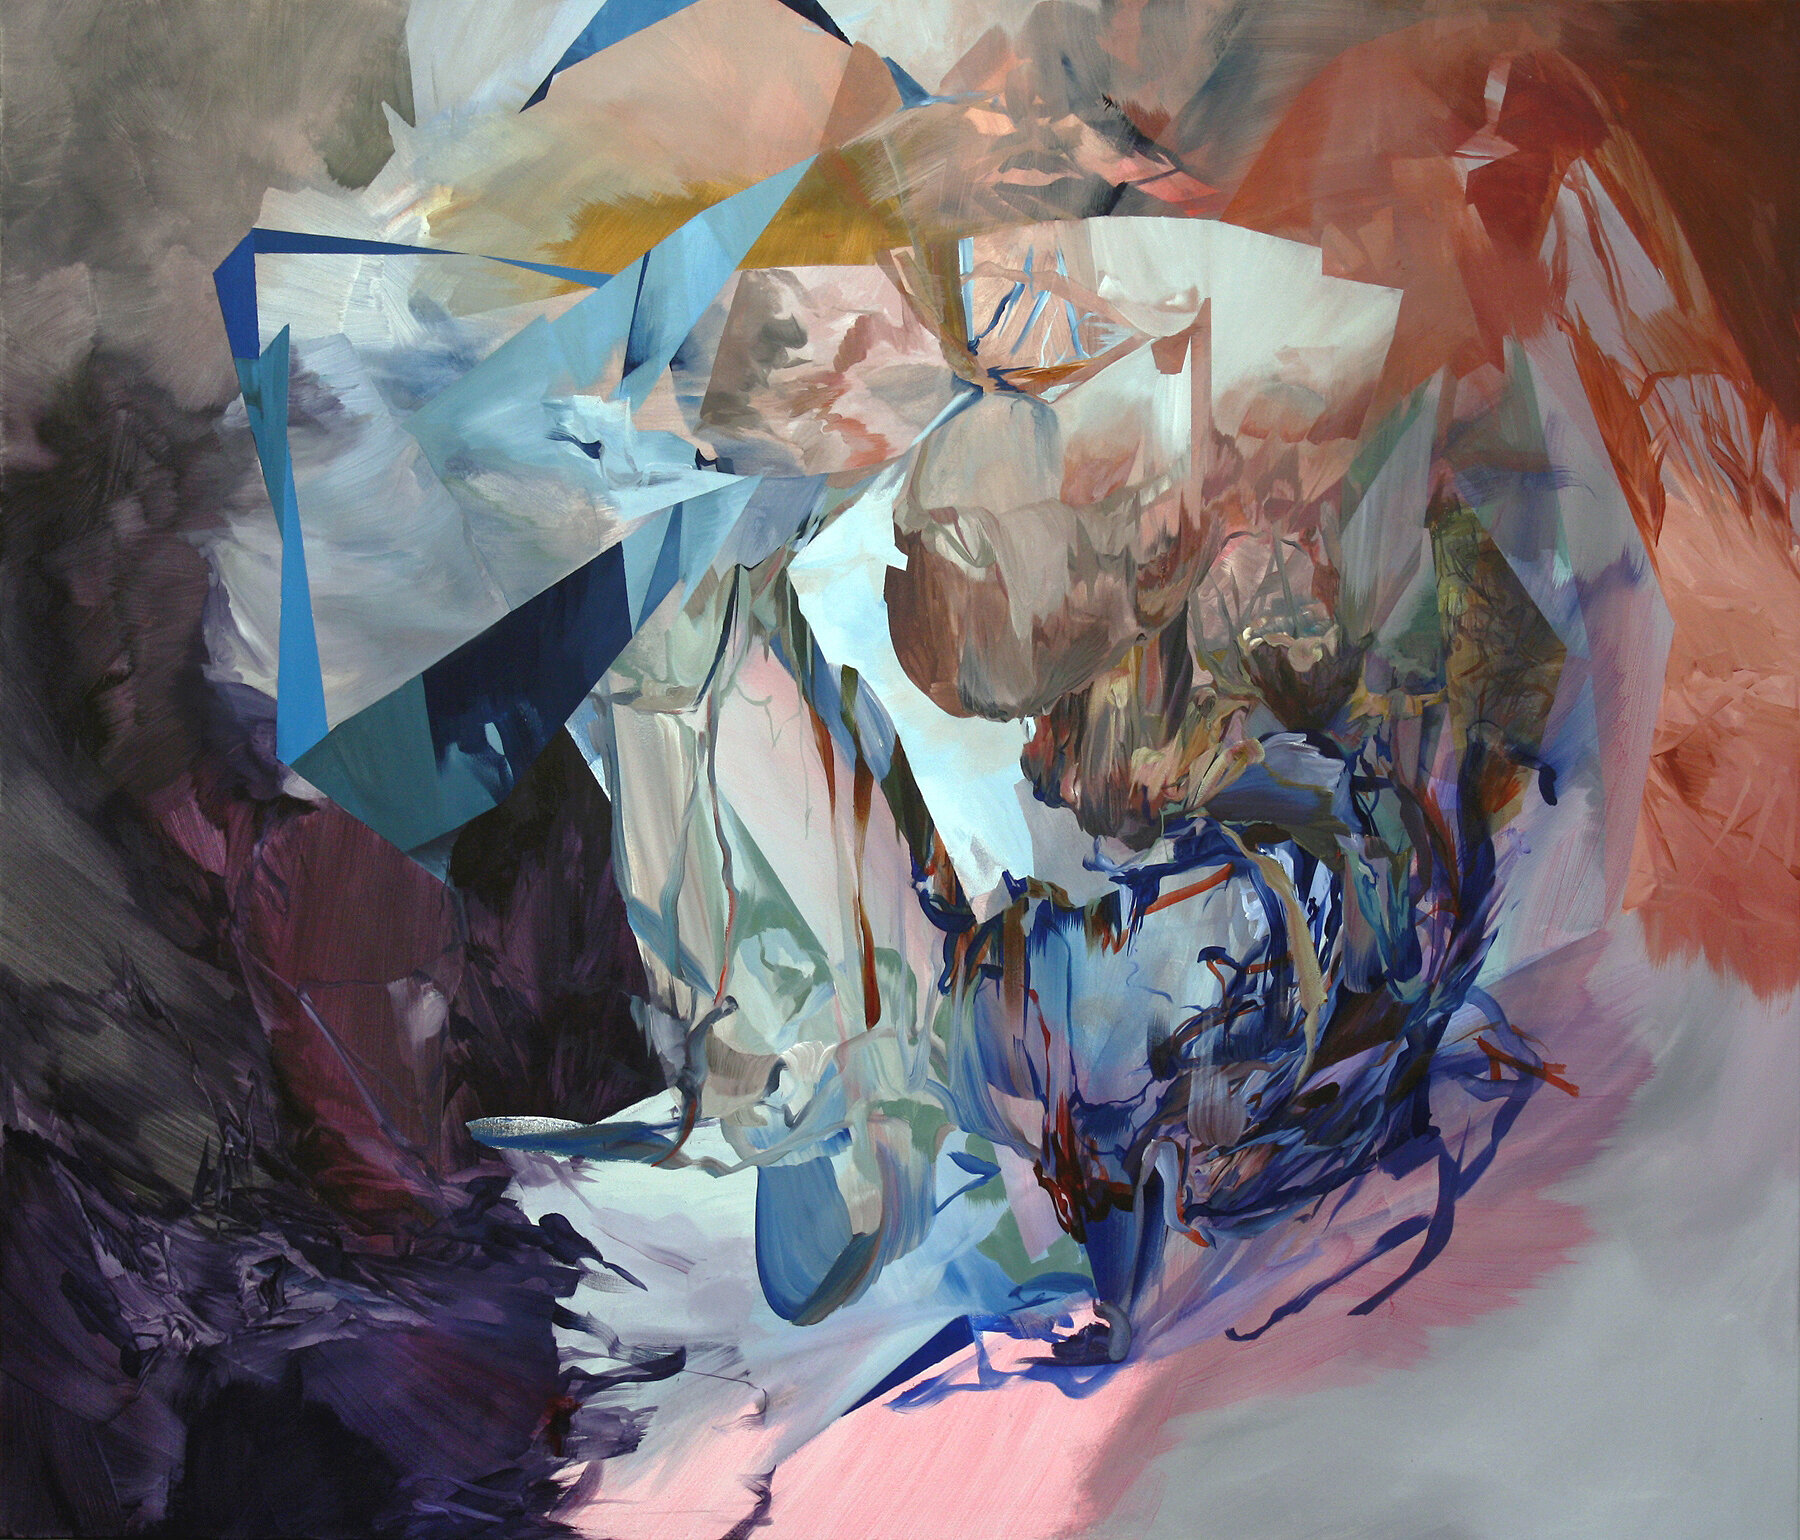   Scavenger , 2010  acrylic on canvas  72” x 84” 